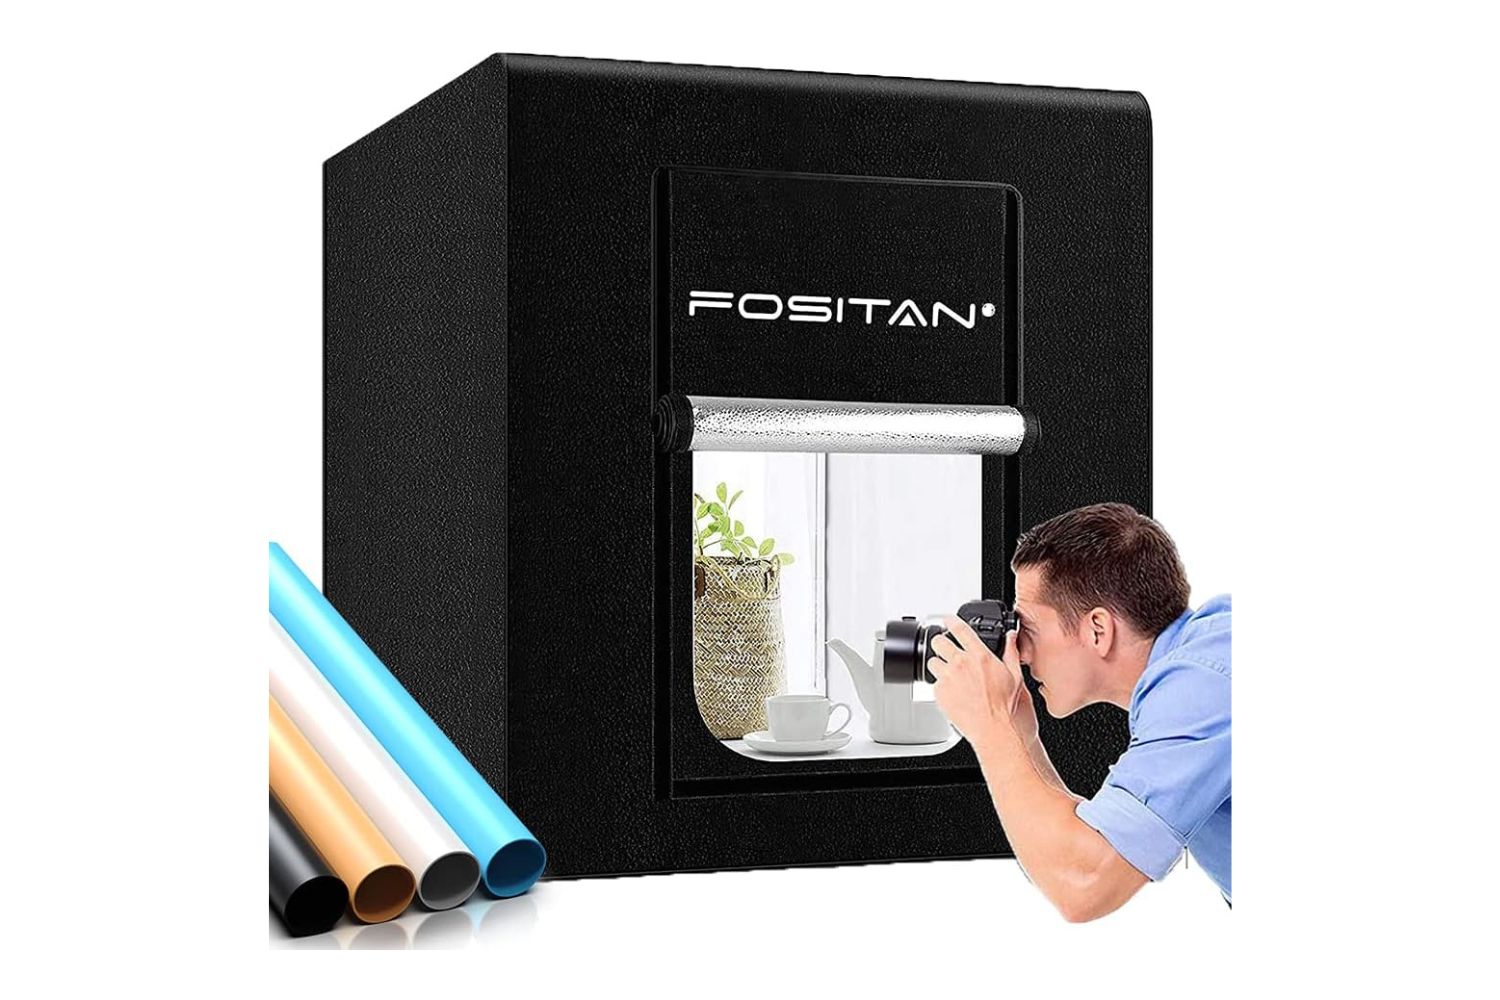 Fositan Photo Box